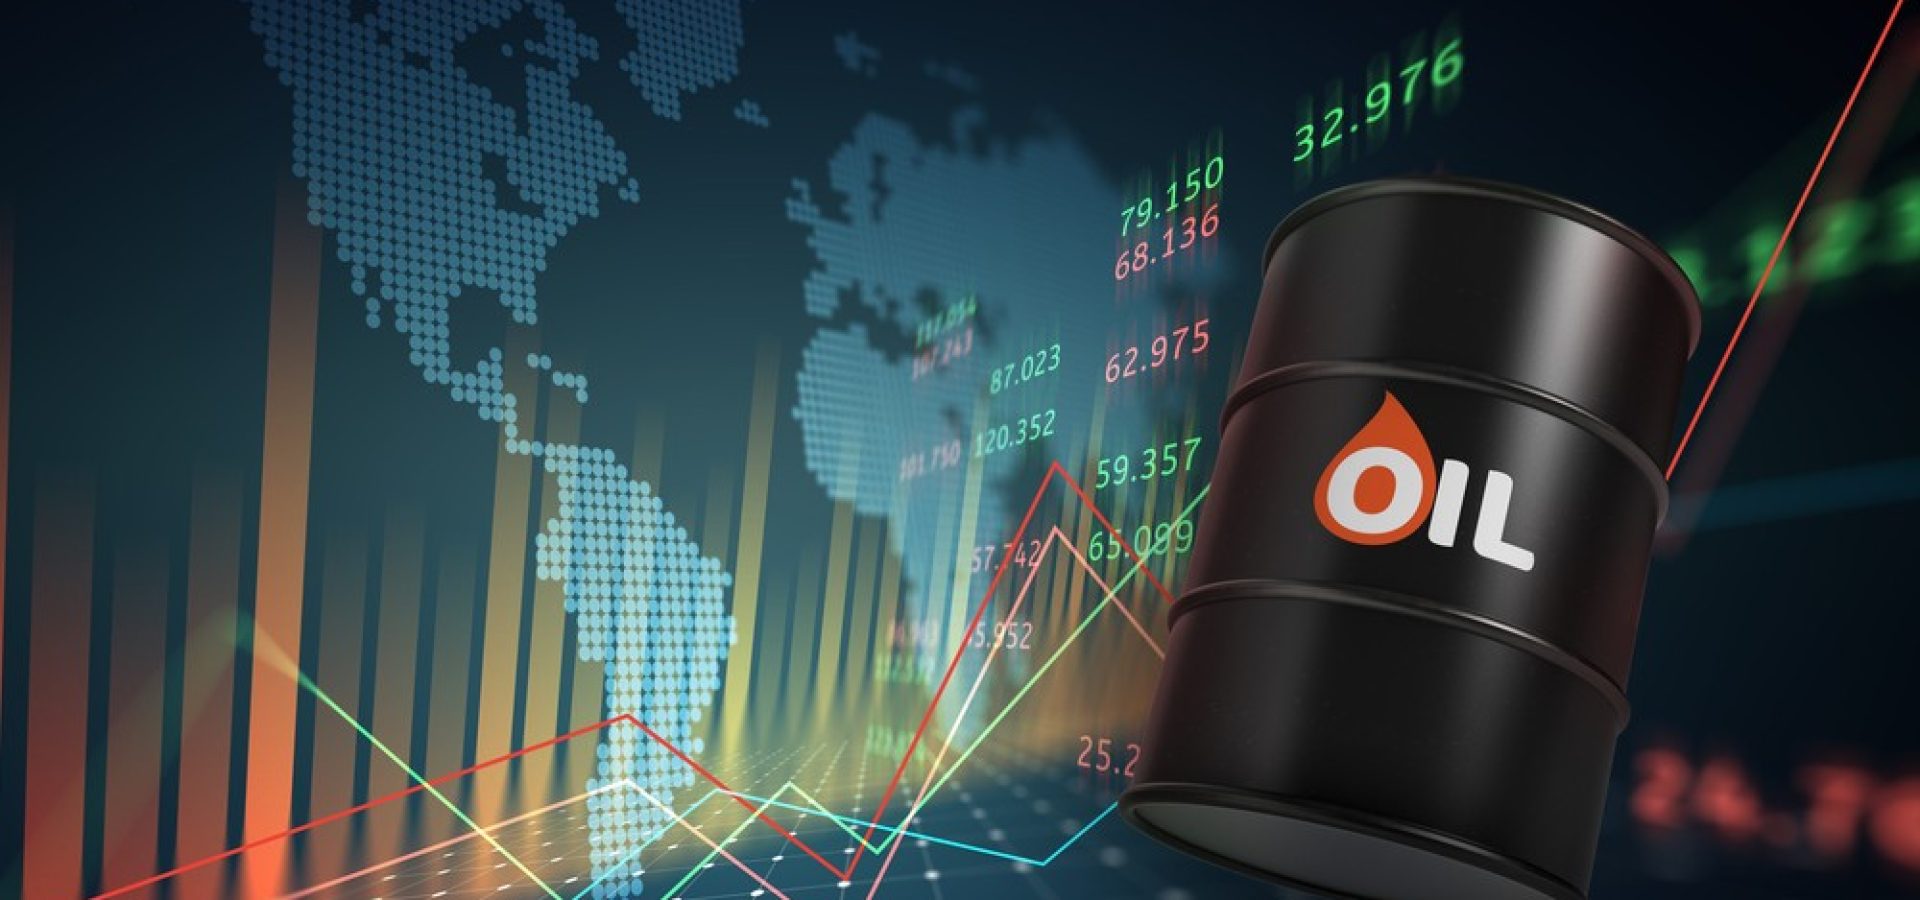 Oil might reach $150 per barrel as OPEC+ will control supply